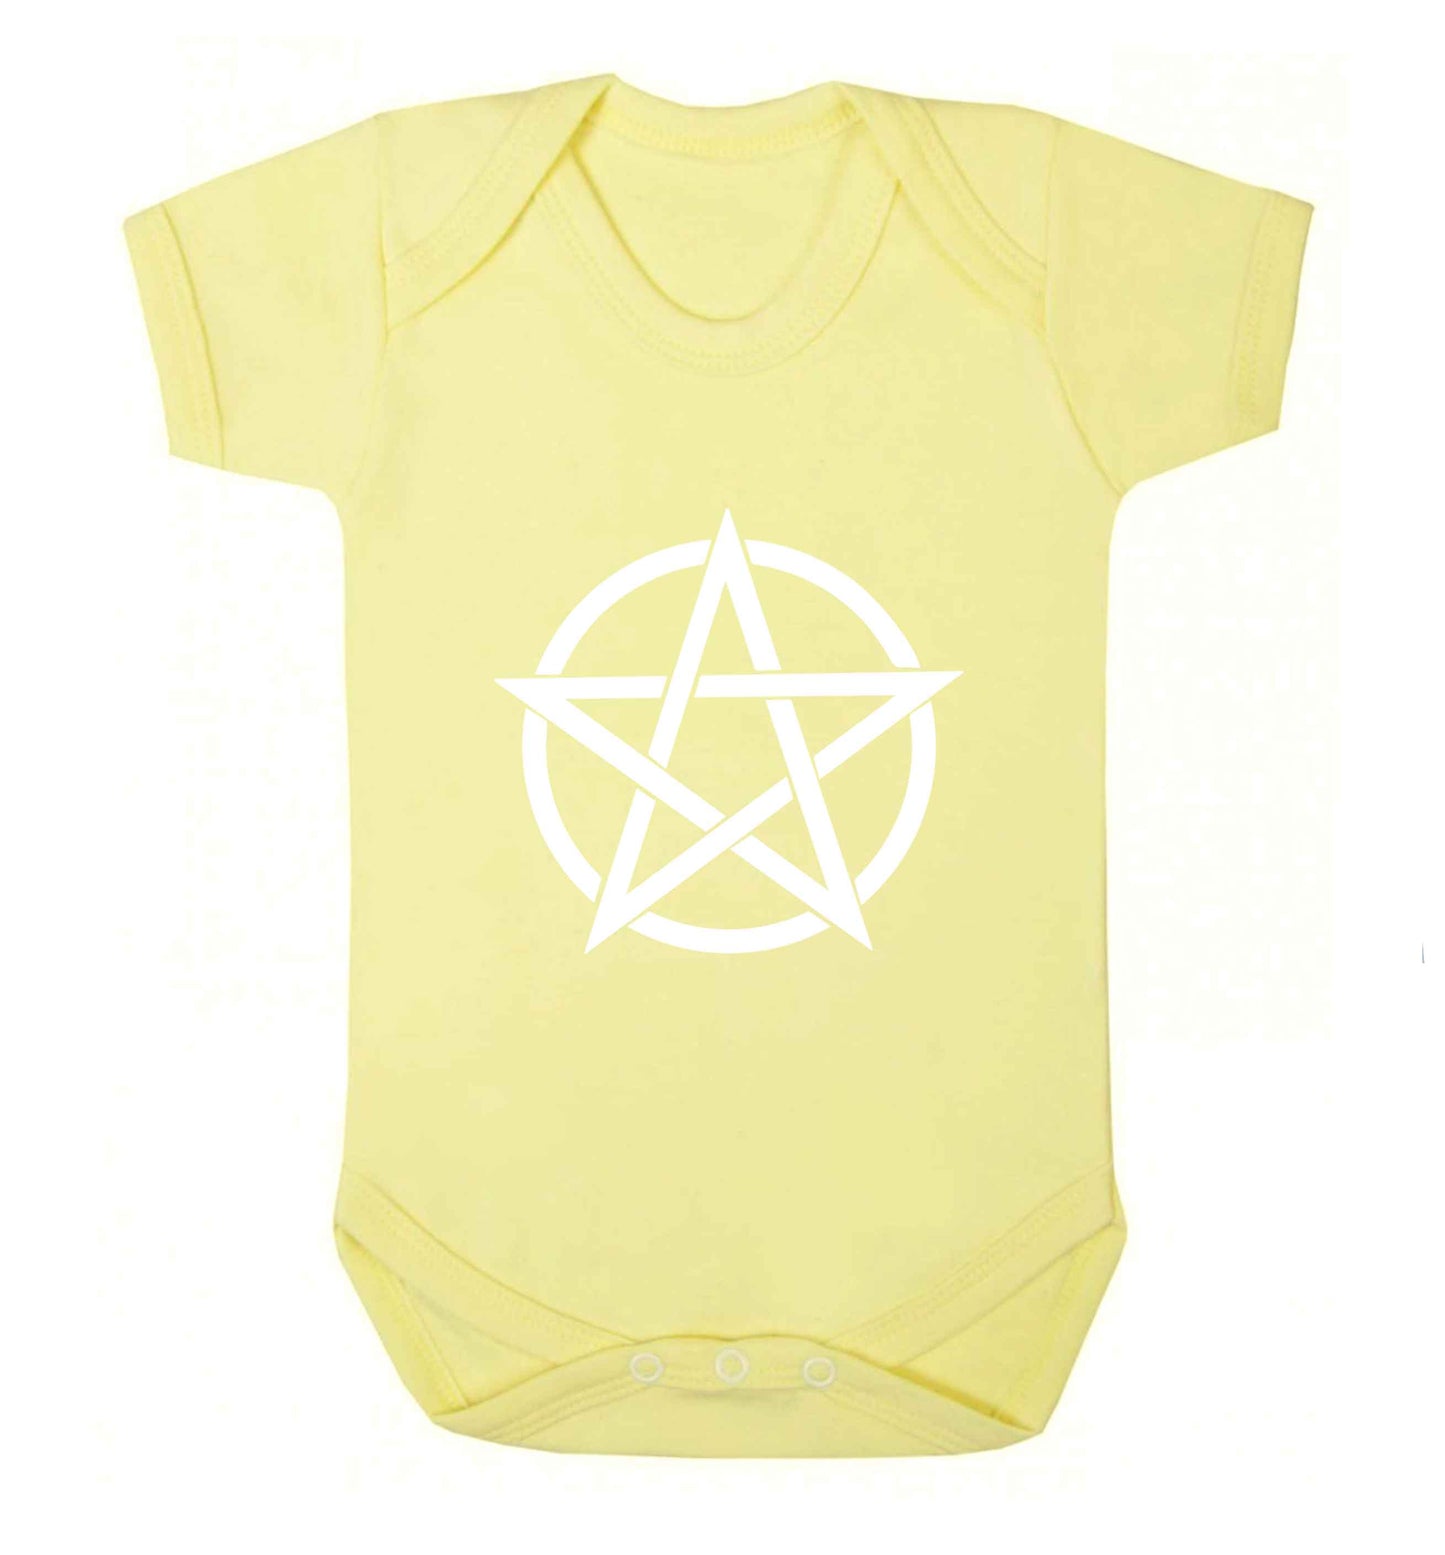 Pentagram symbol baby vest pale yellow 18-24 months